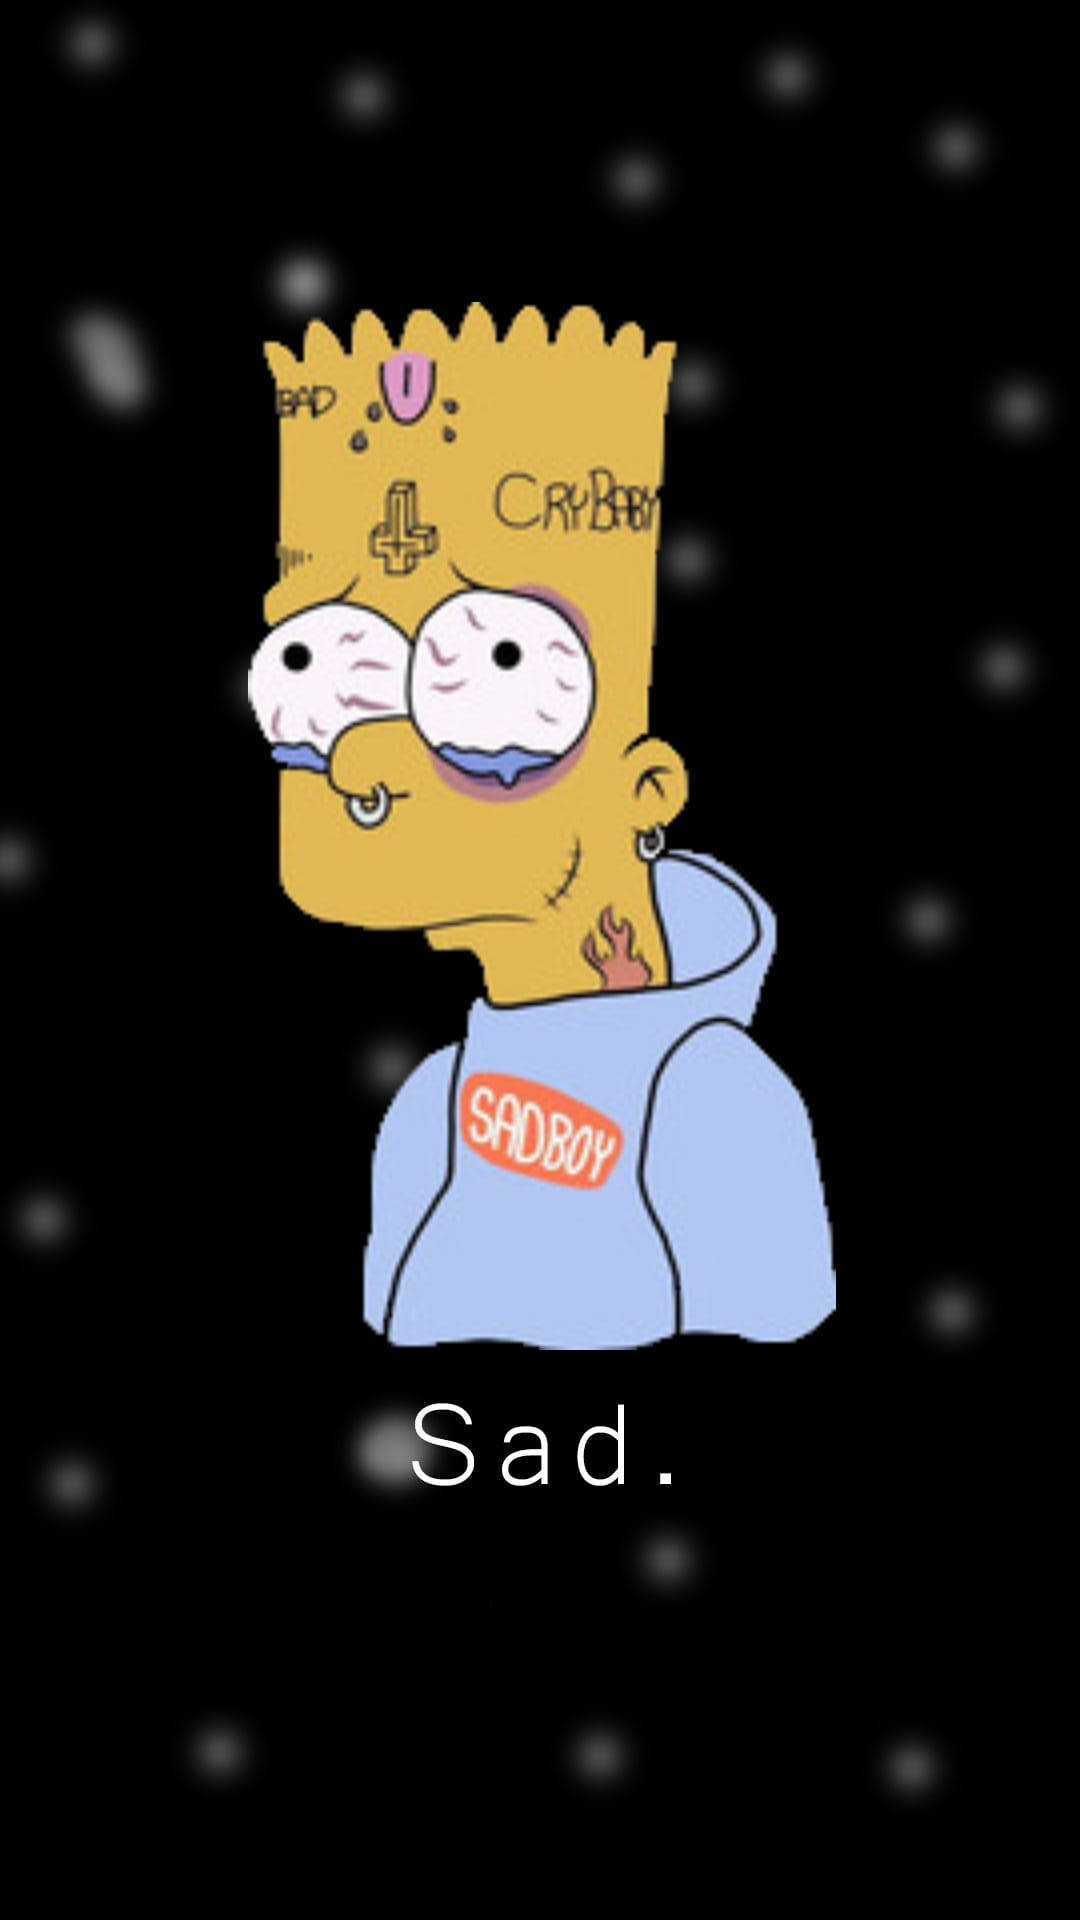 Sad Simpsons Sadboy Sweater Background